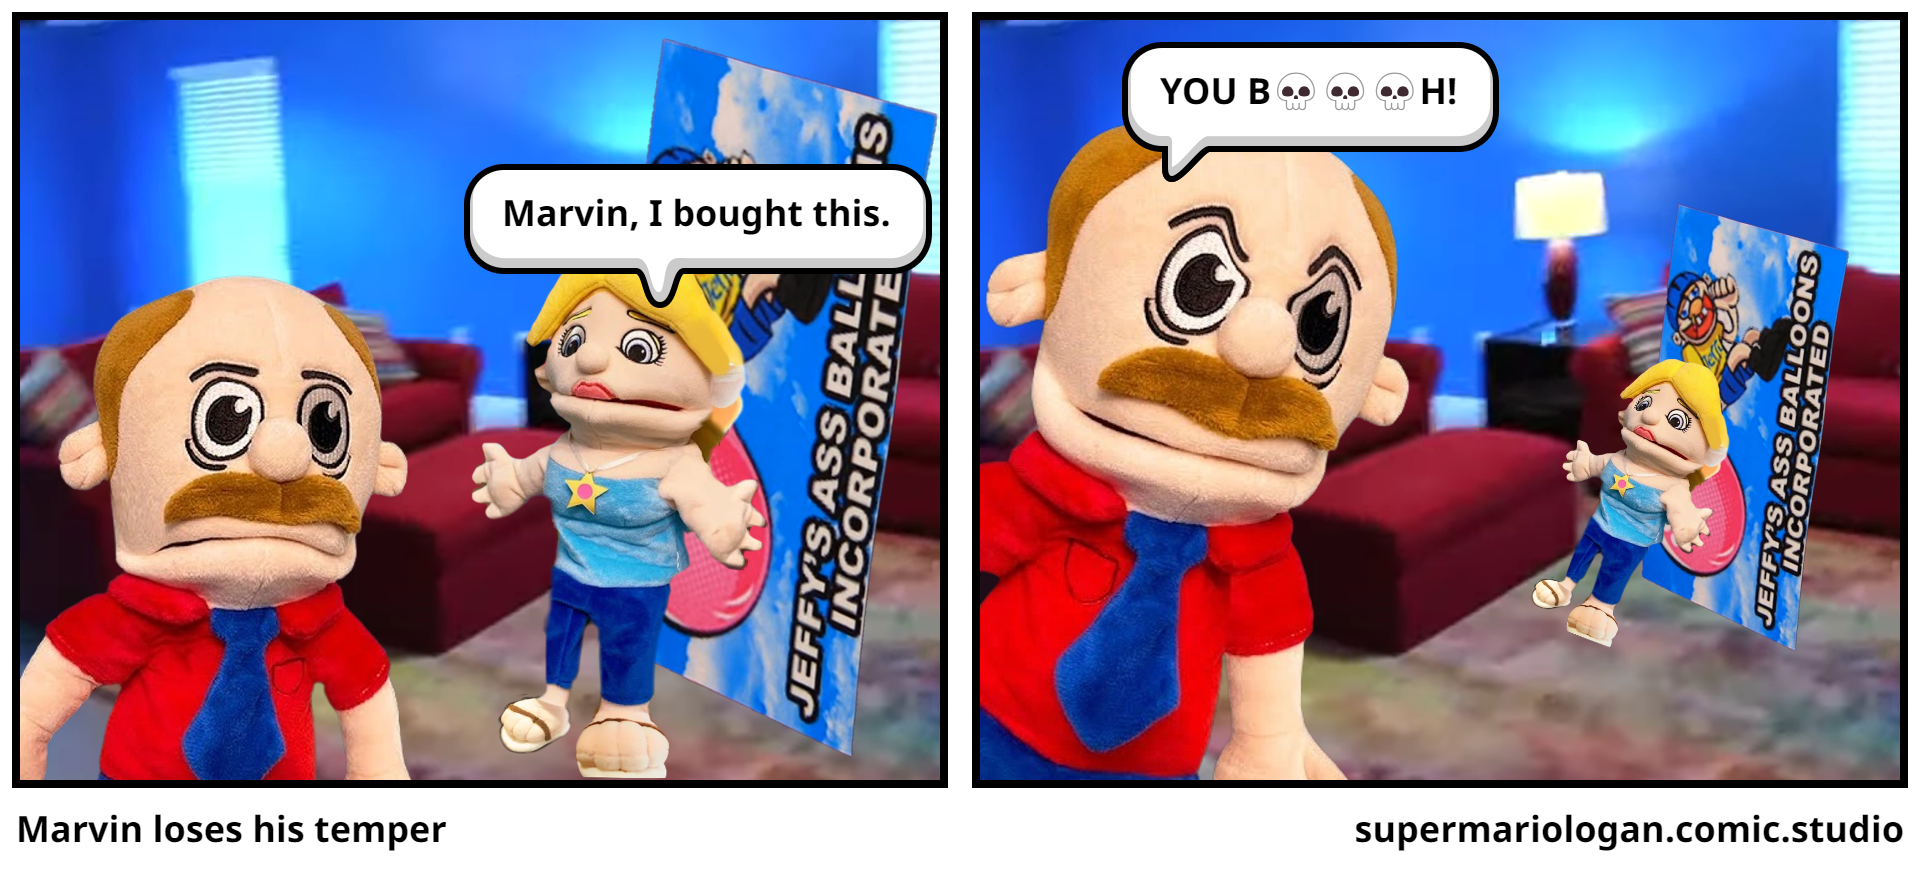 Marvin loses his temper